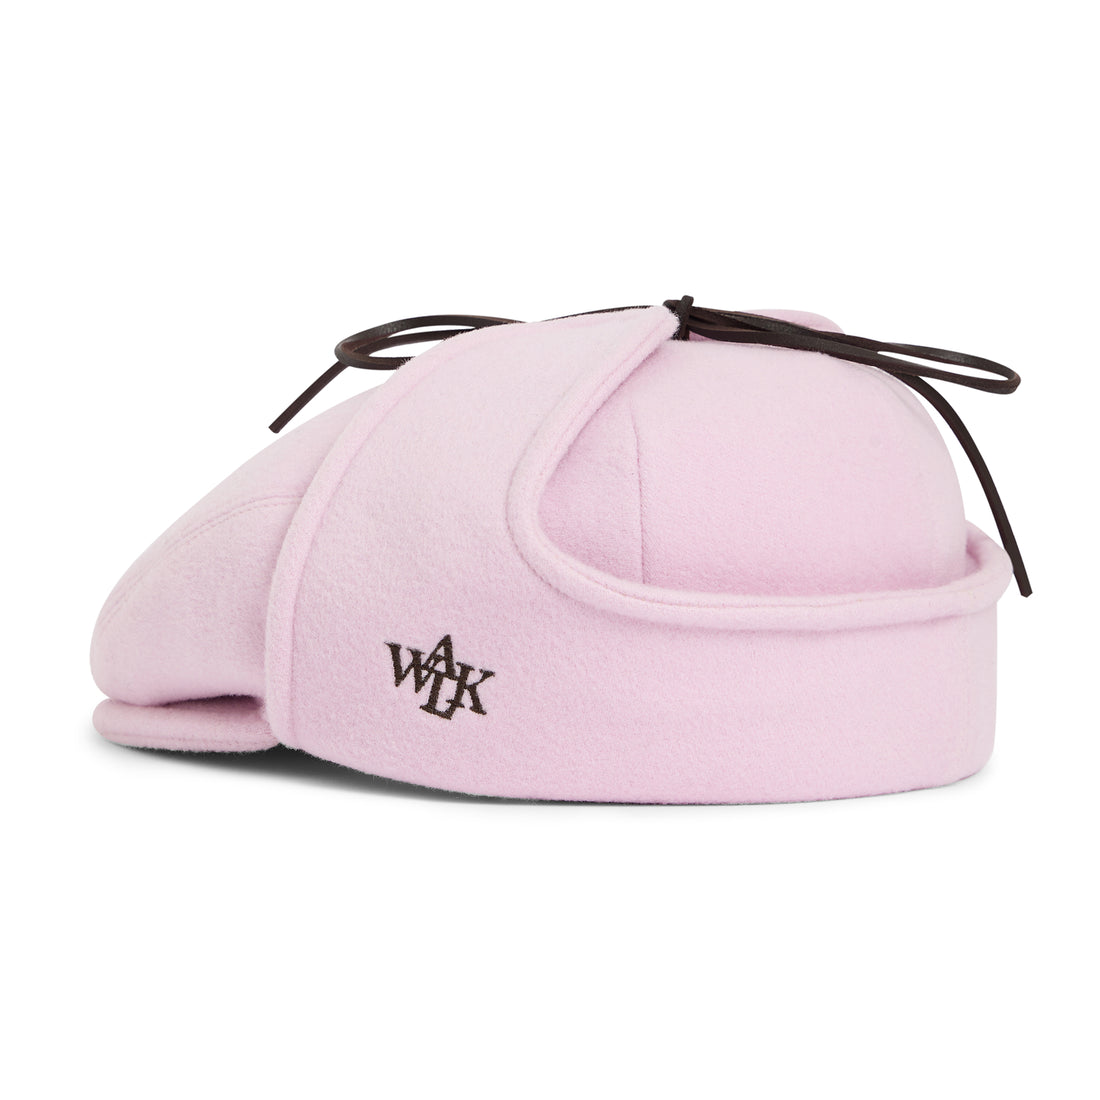 The sherlock beret in pale pink wool